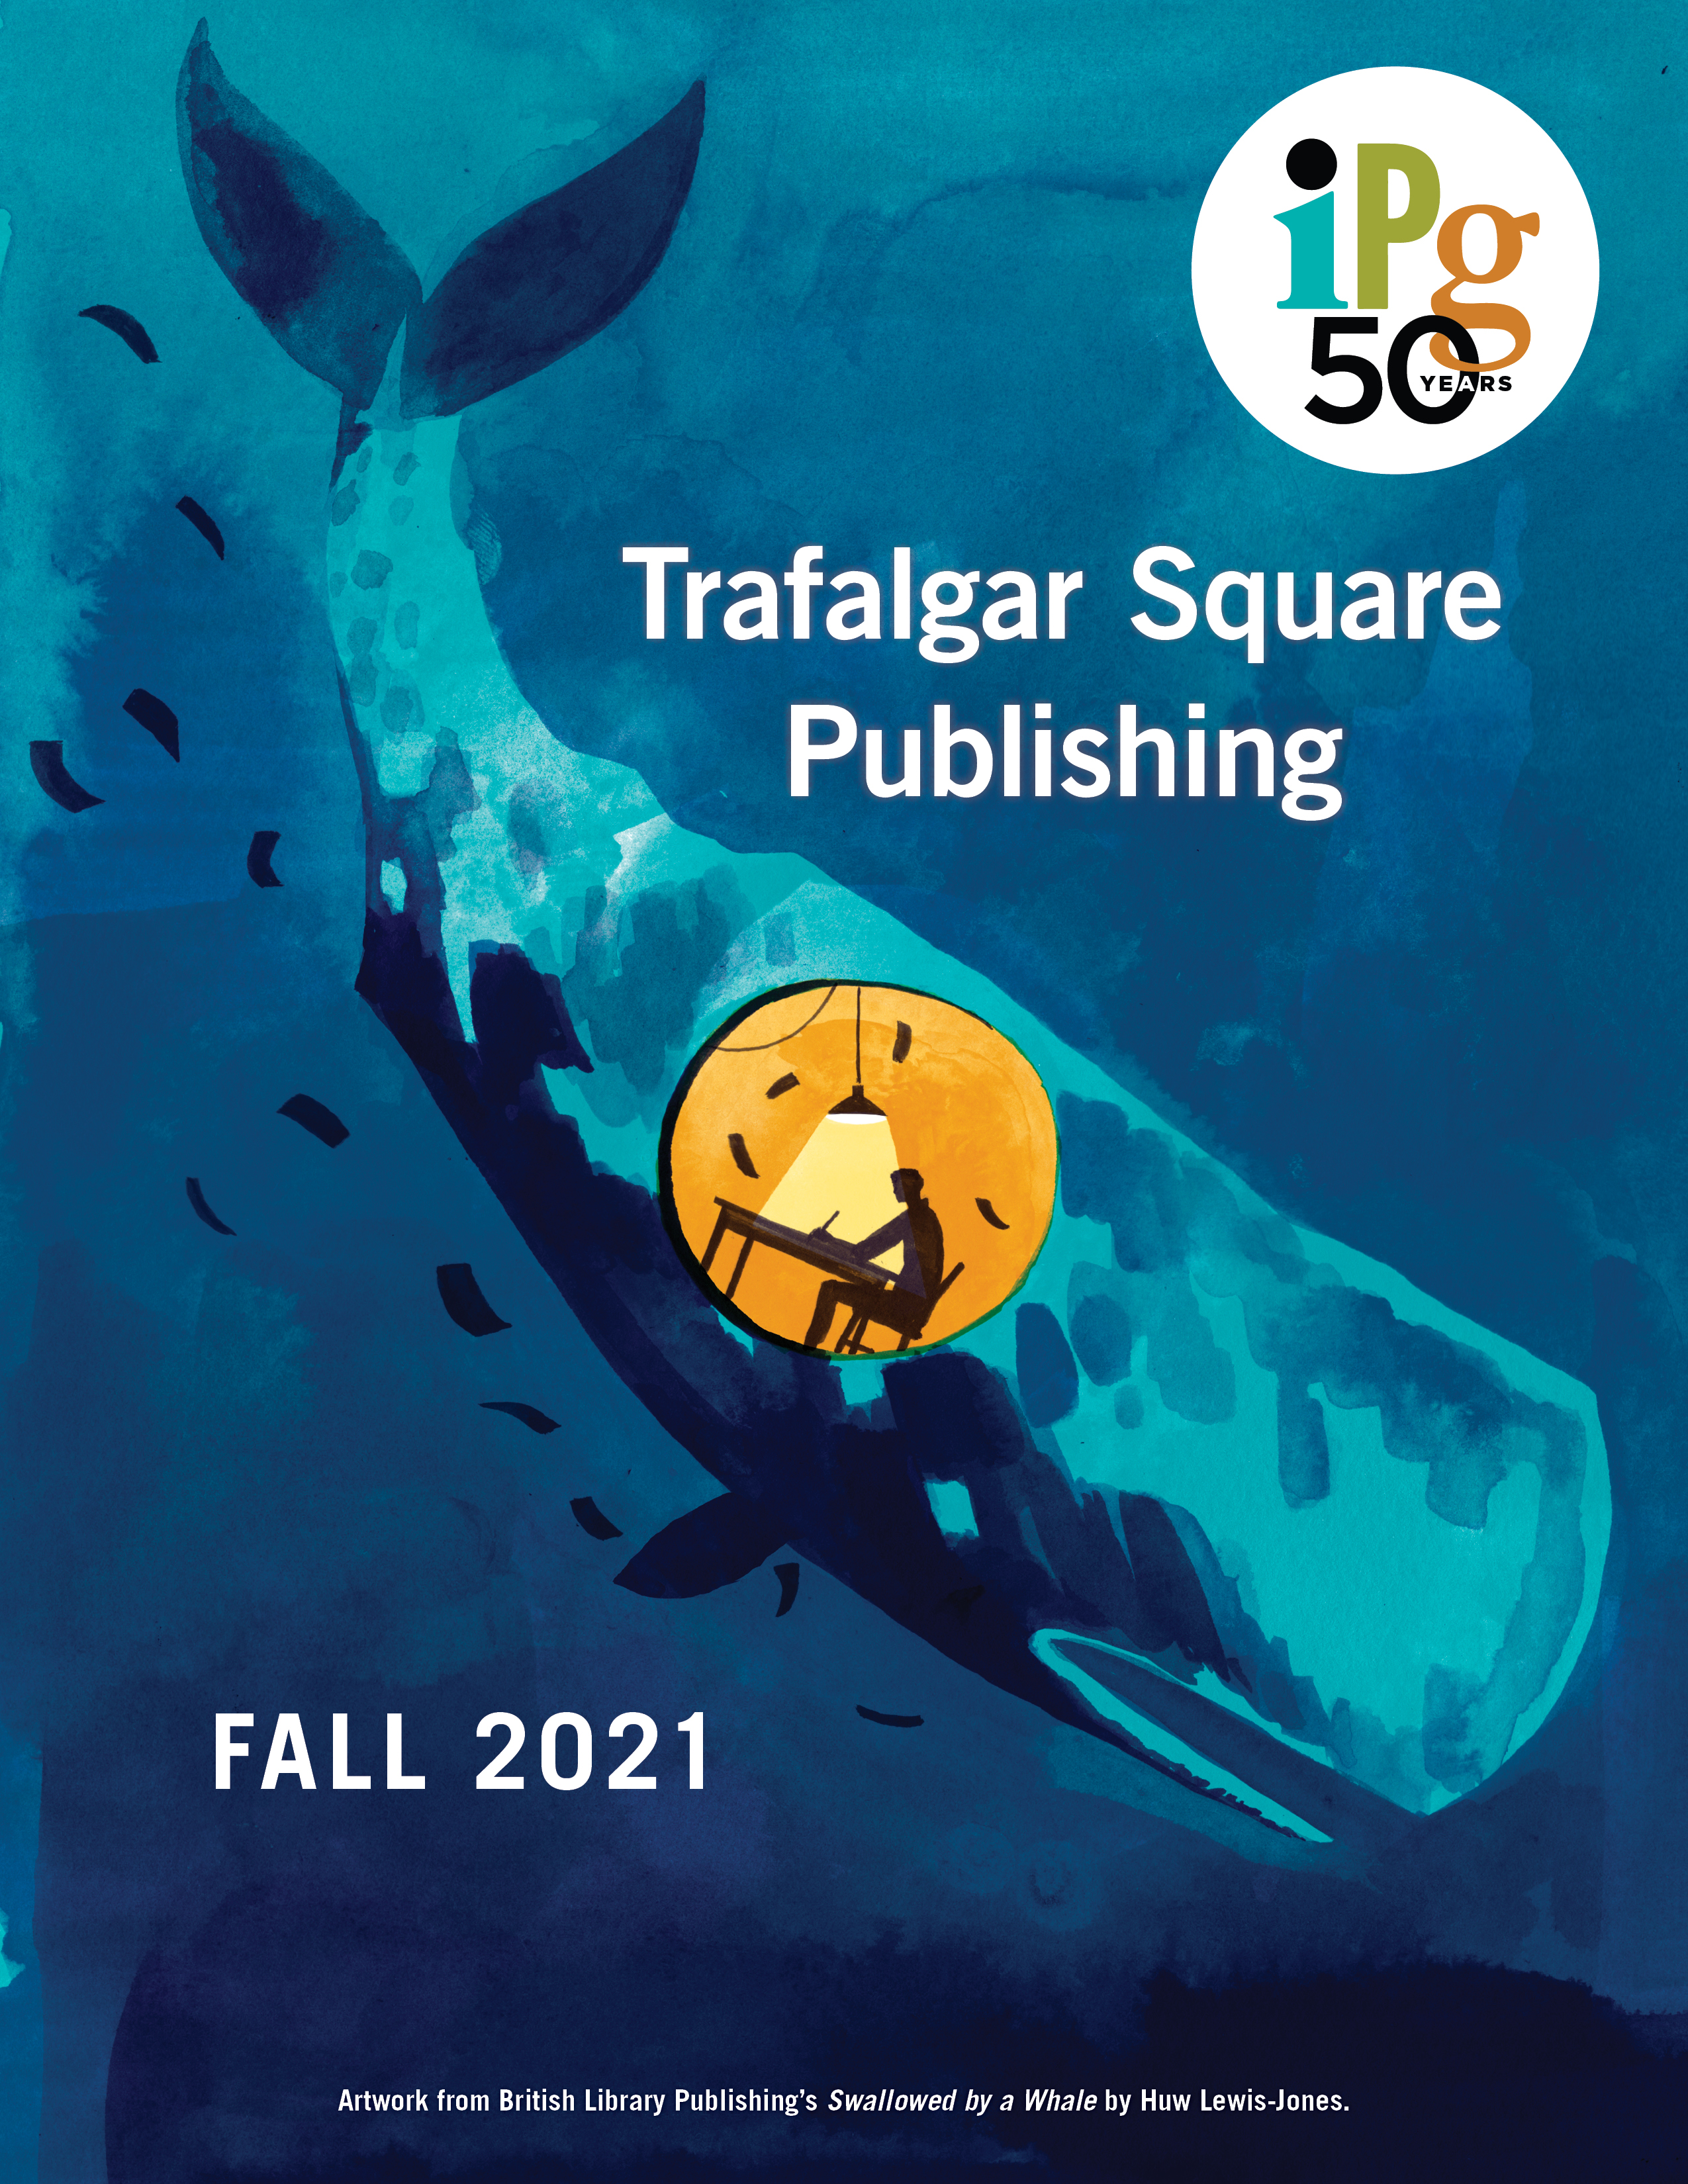 IPG & Trafalgar Square Publishing Children's & Young Adult Titles